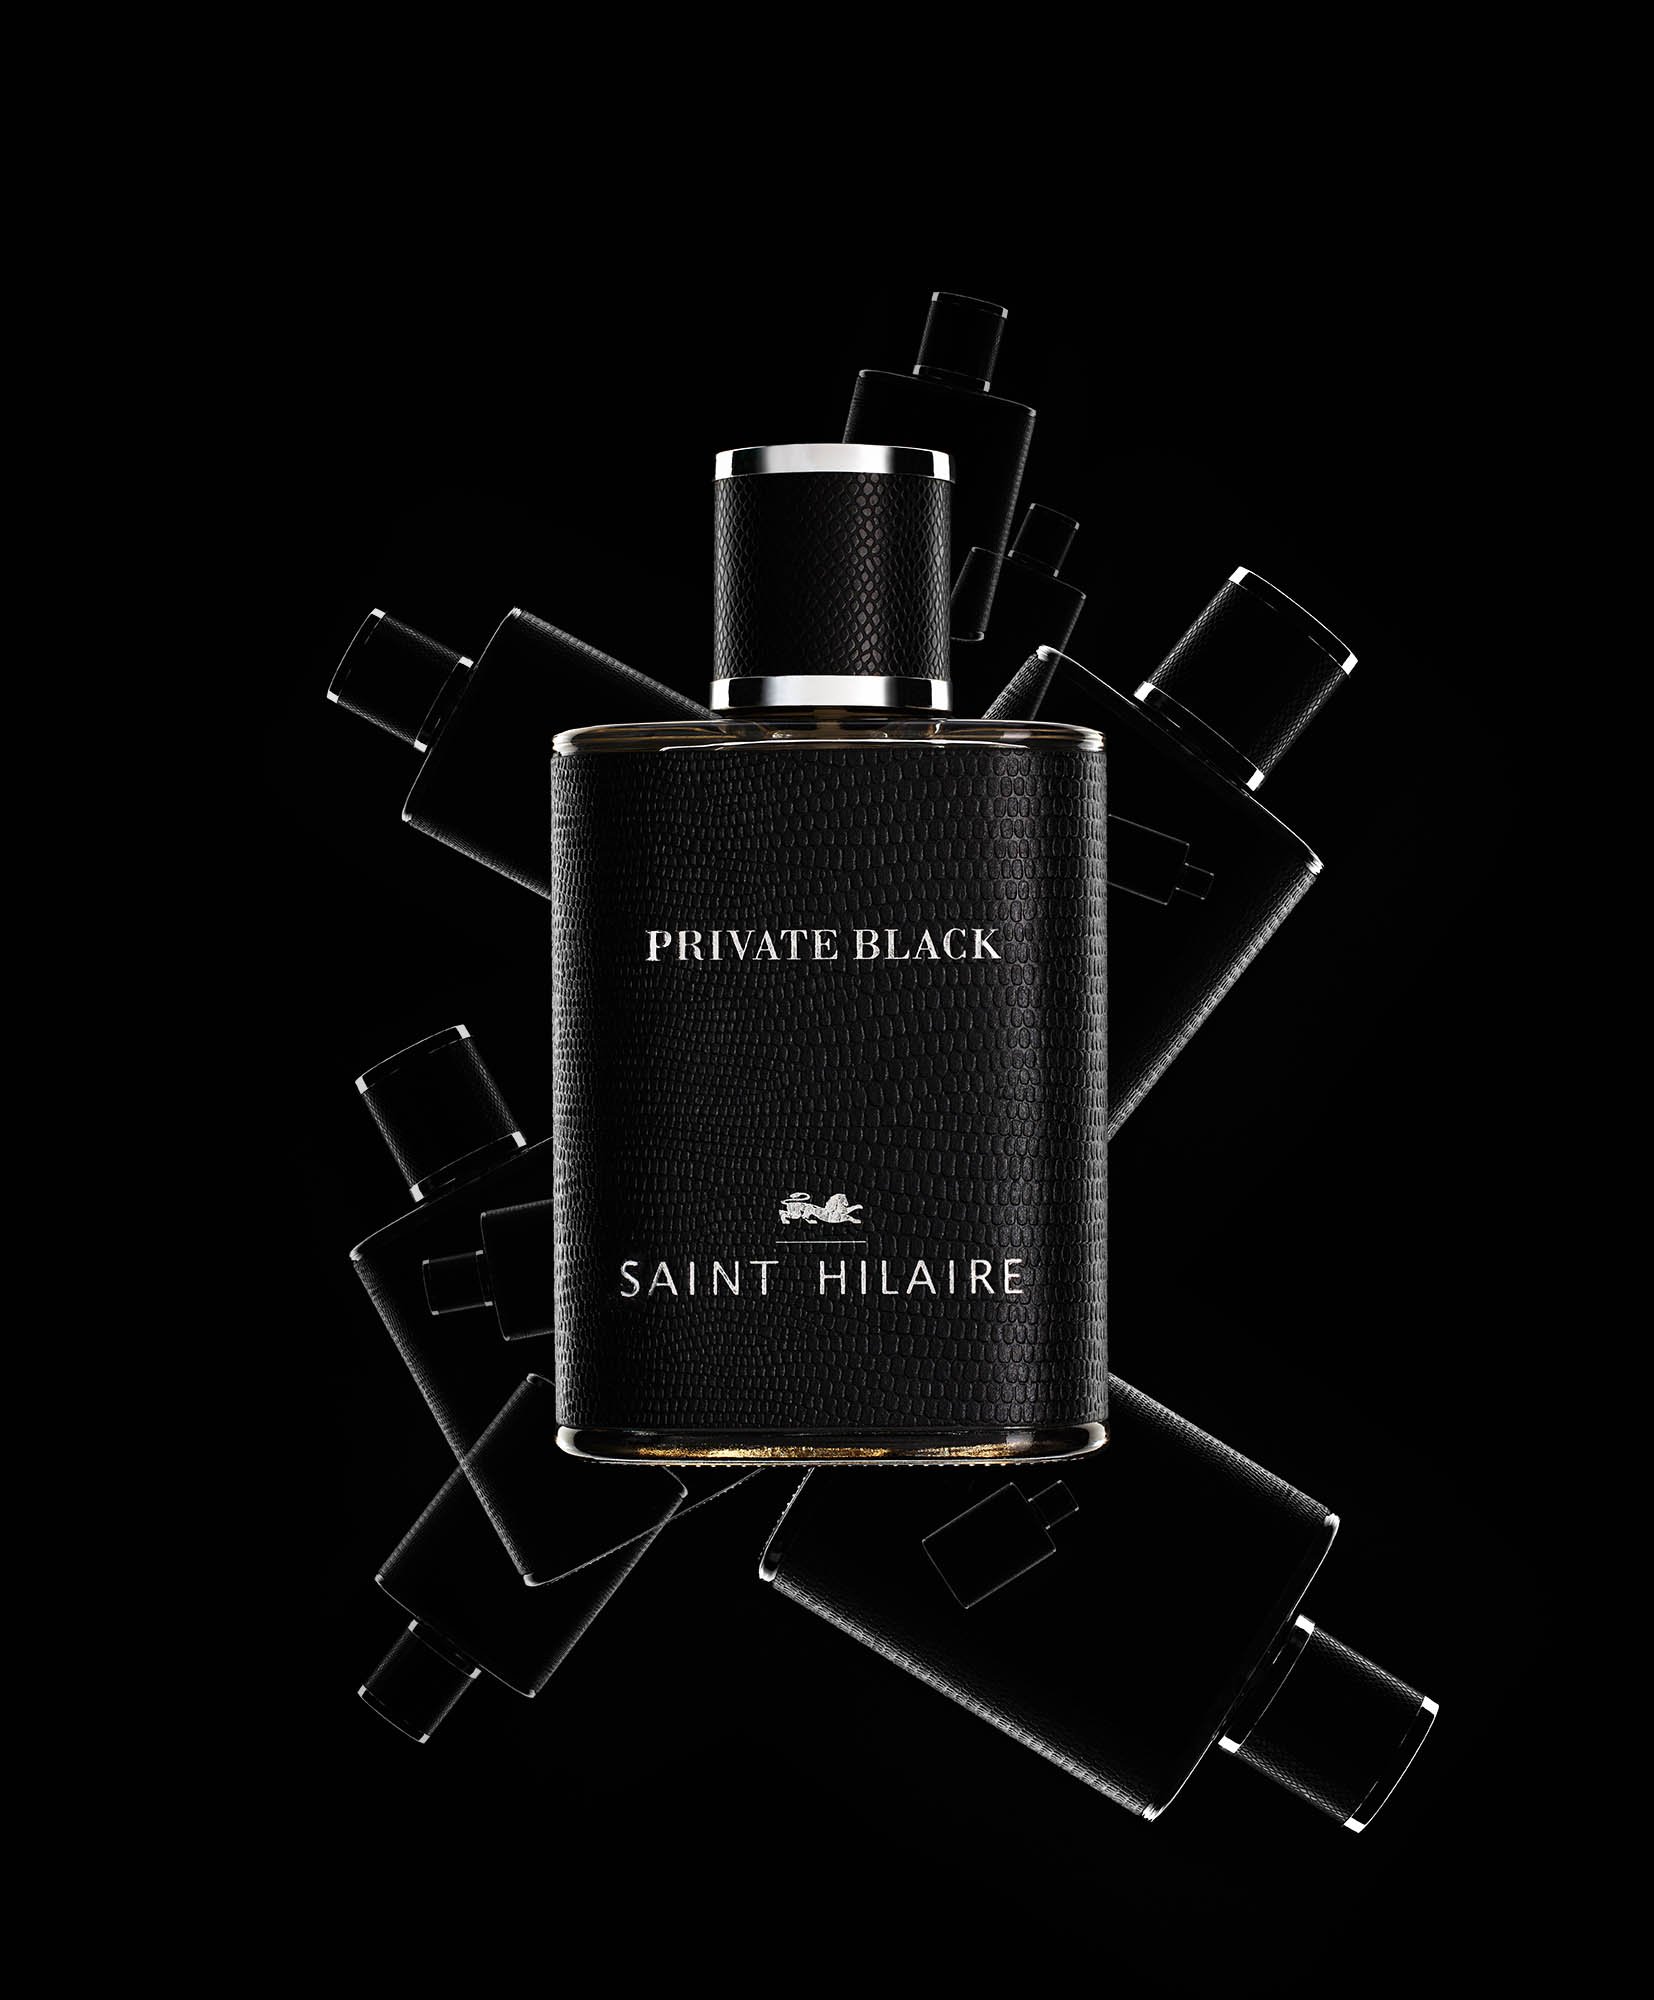  St Hilaire Private Black fragrance on a black background 